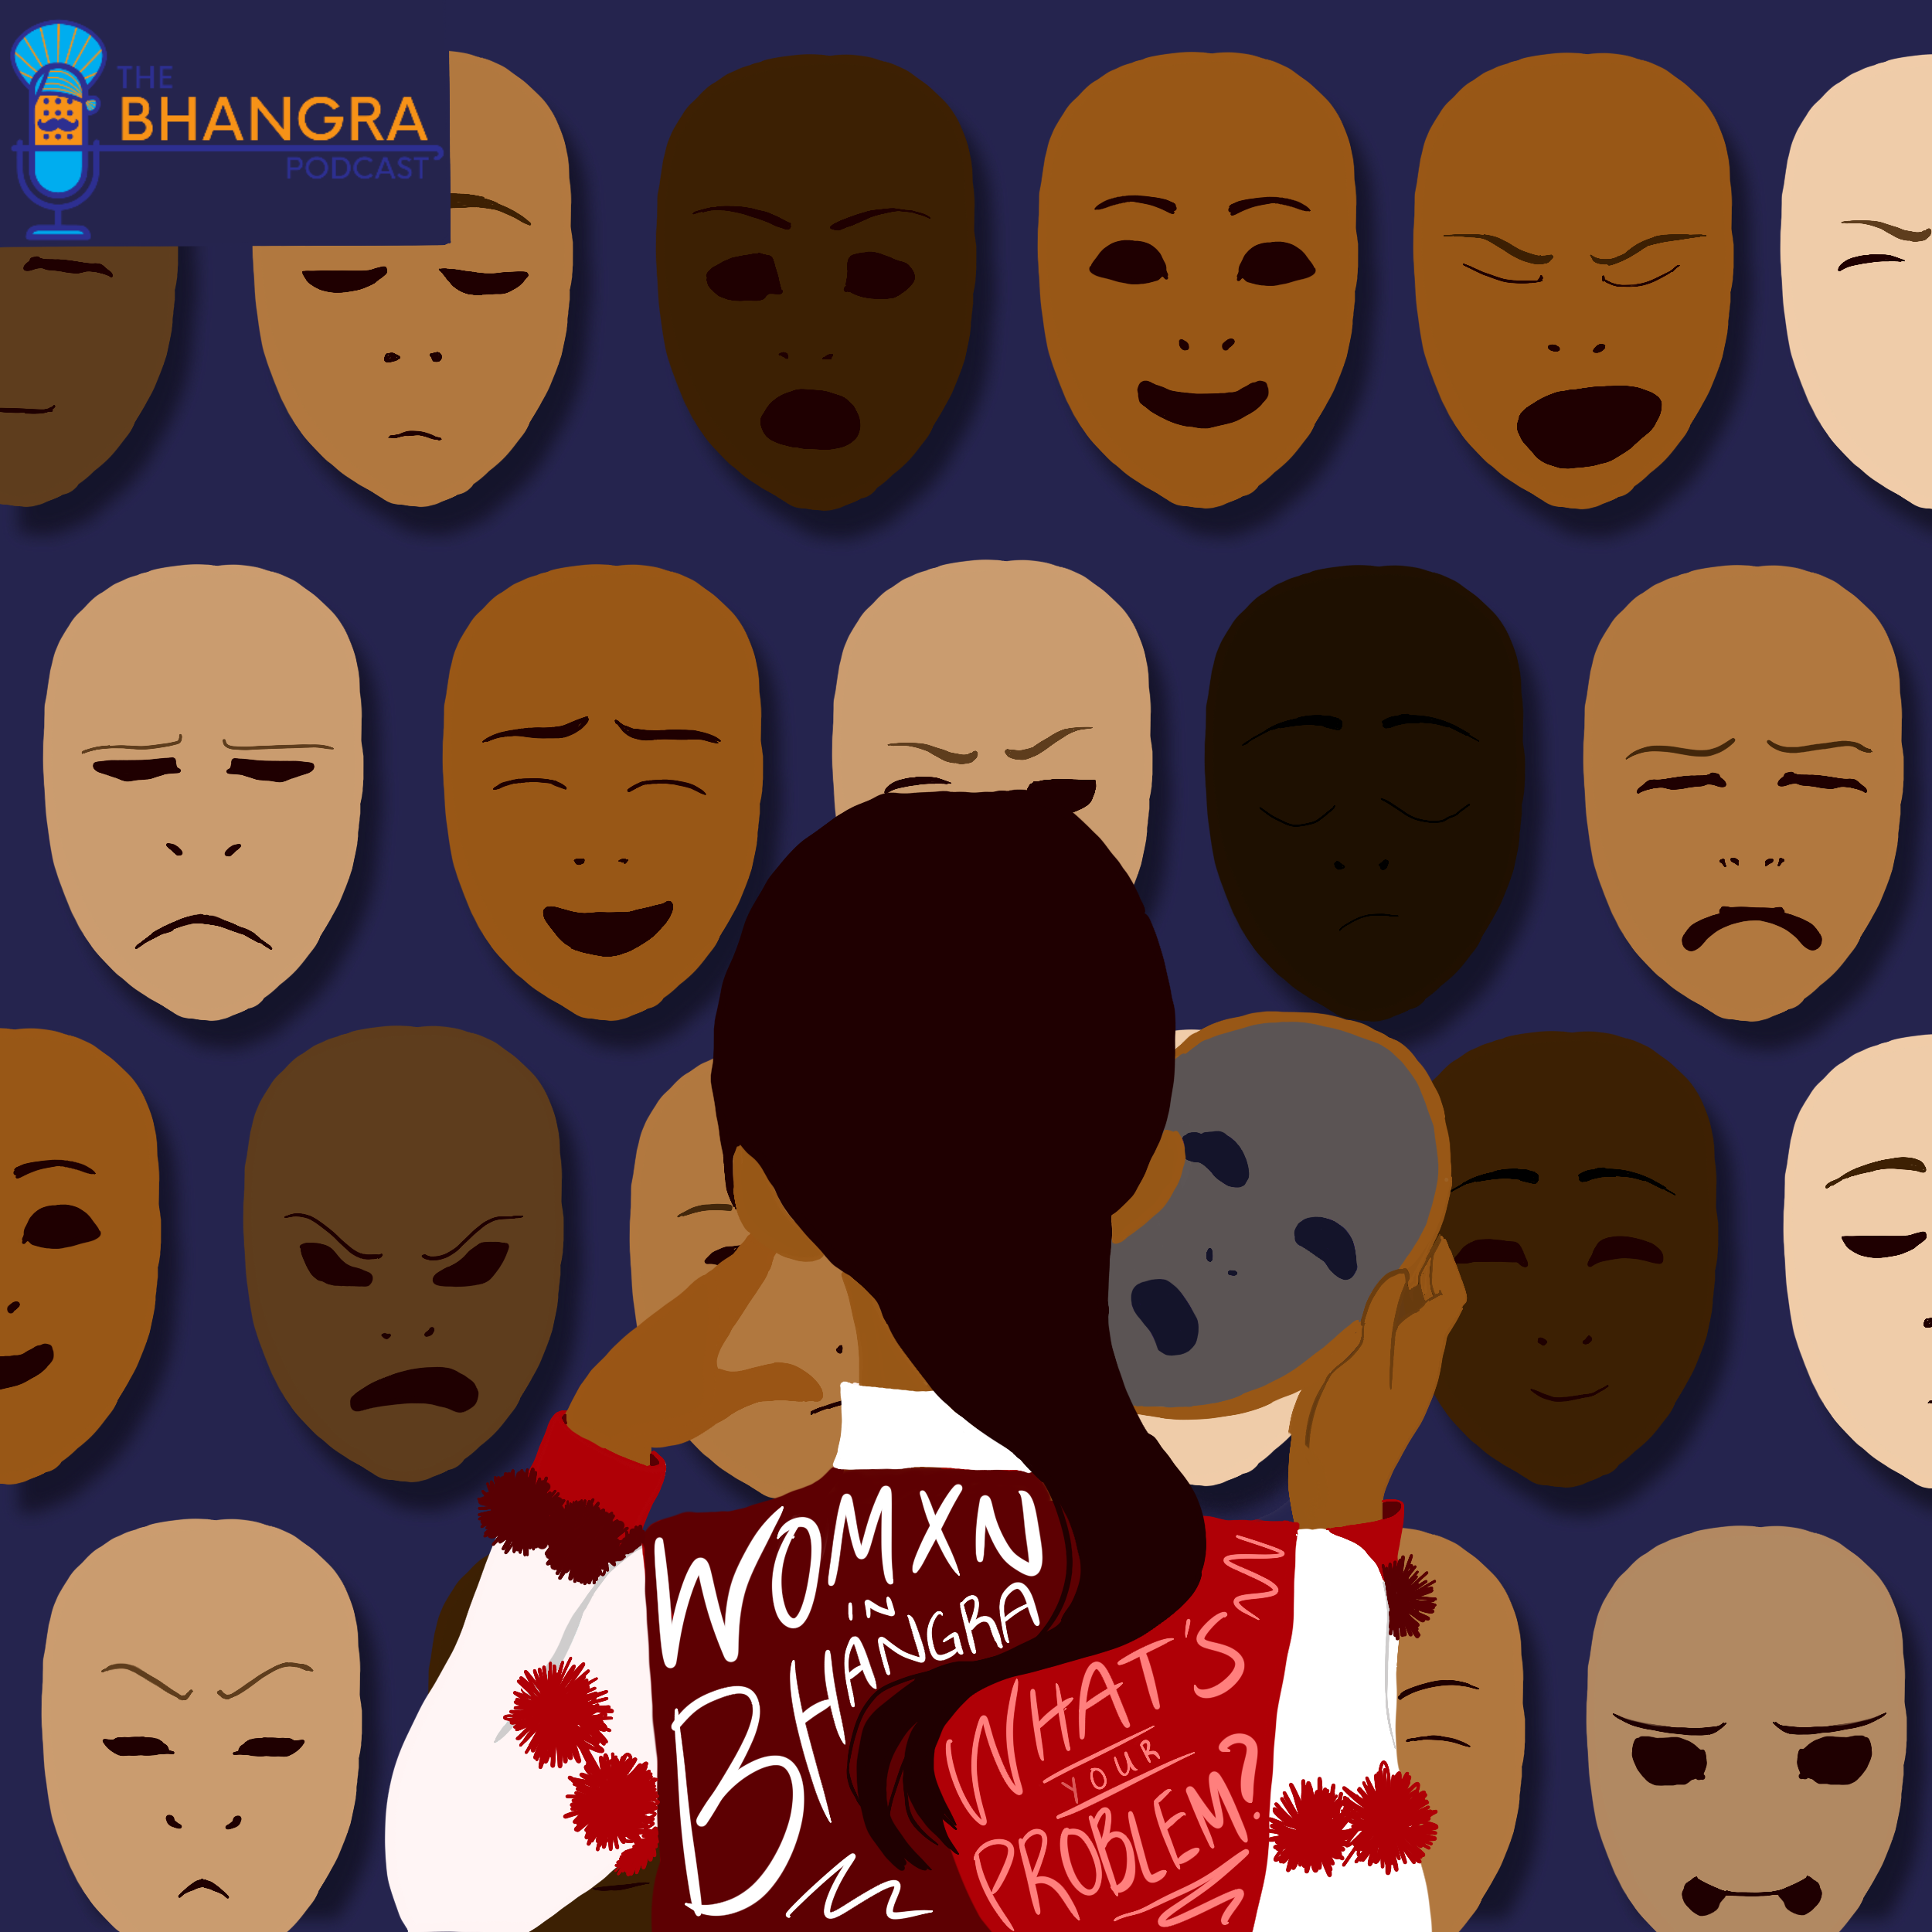 Artwork for podcast The Bhangra Podcast